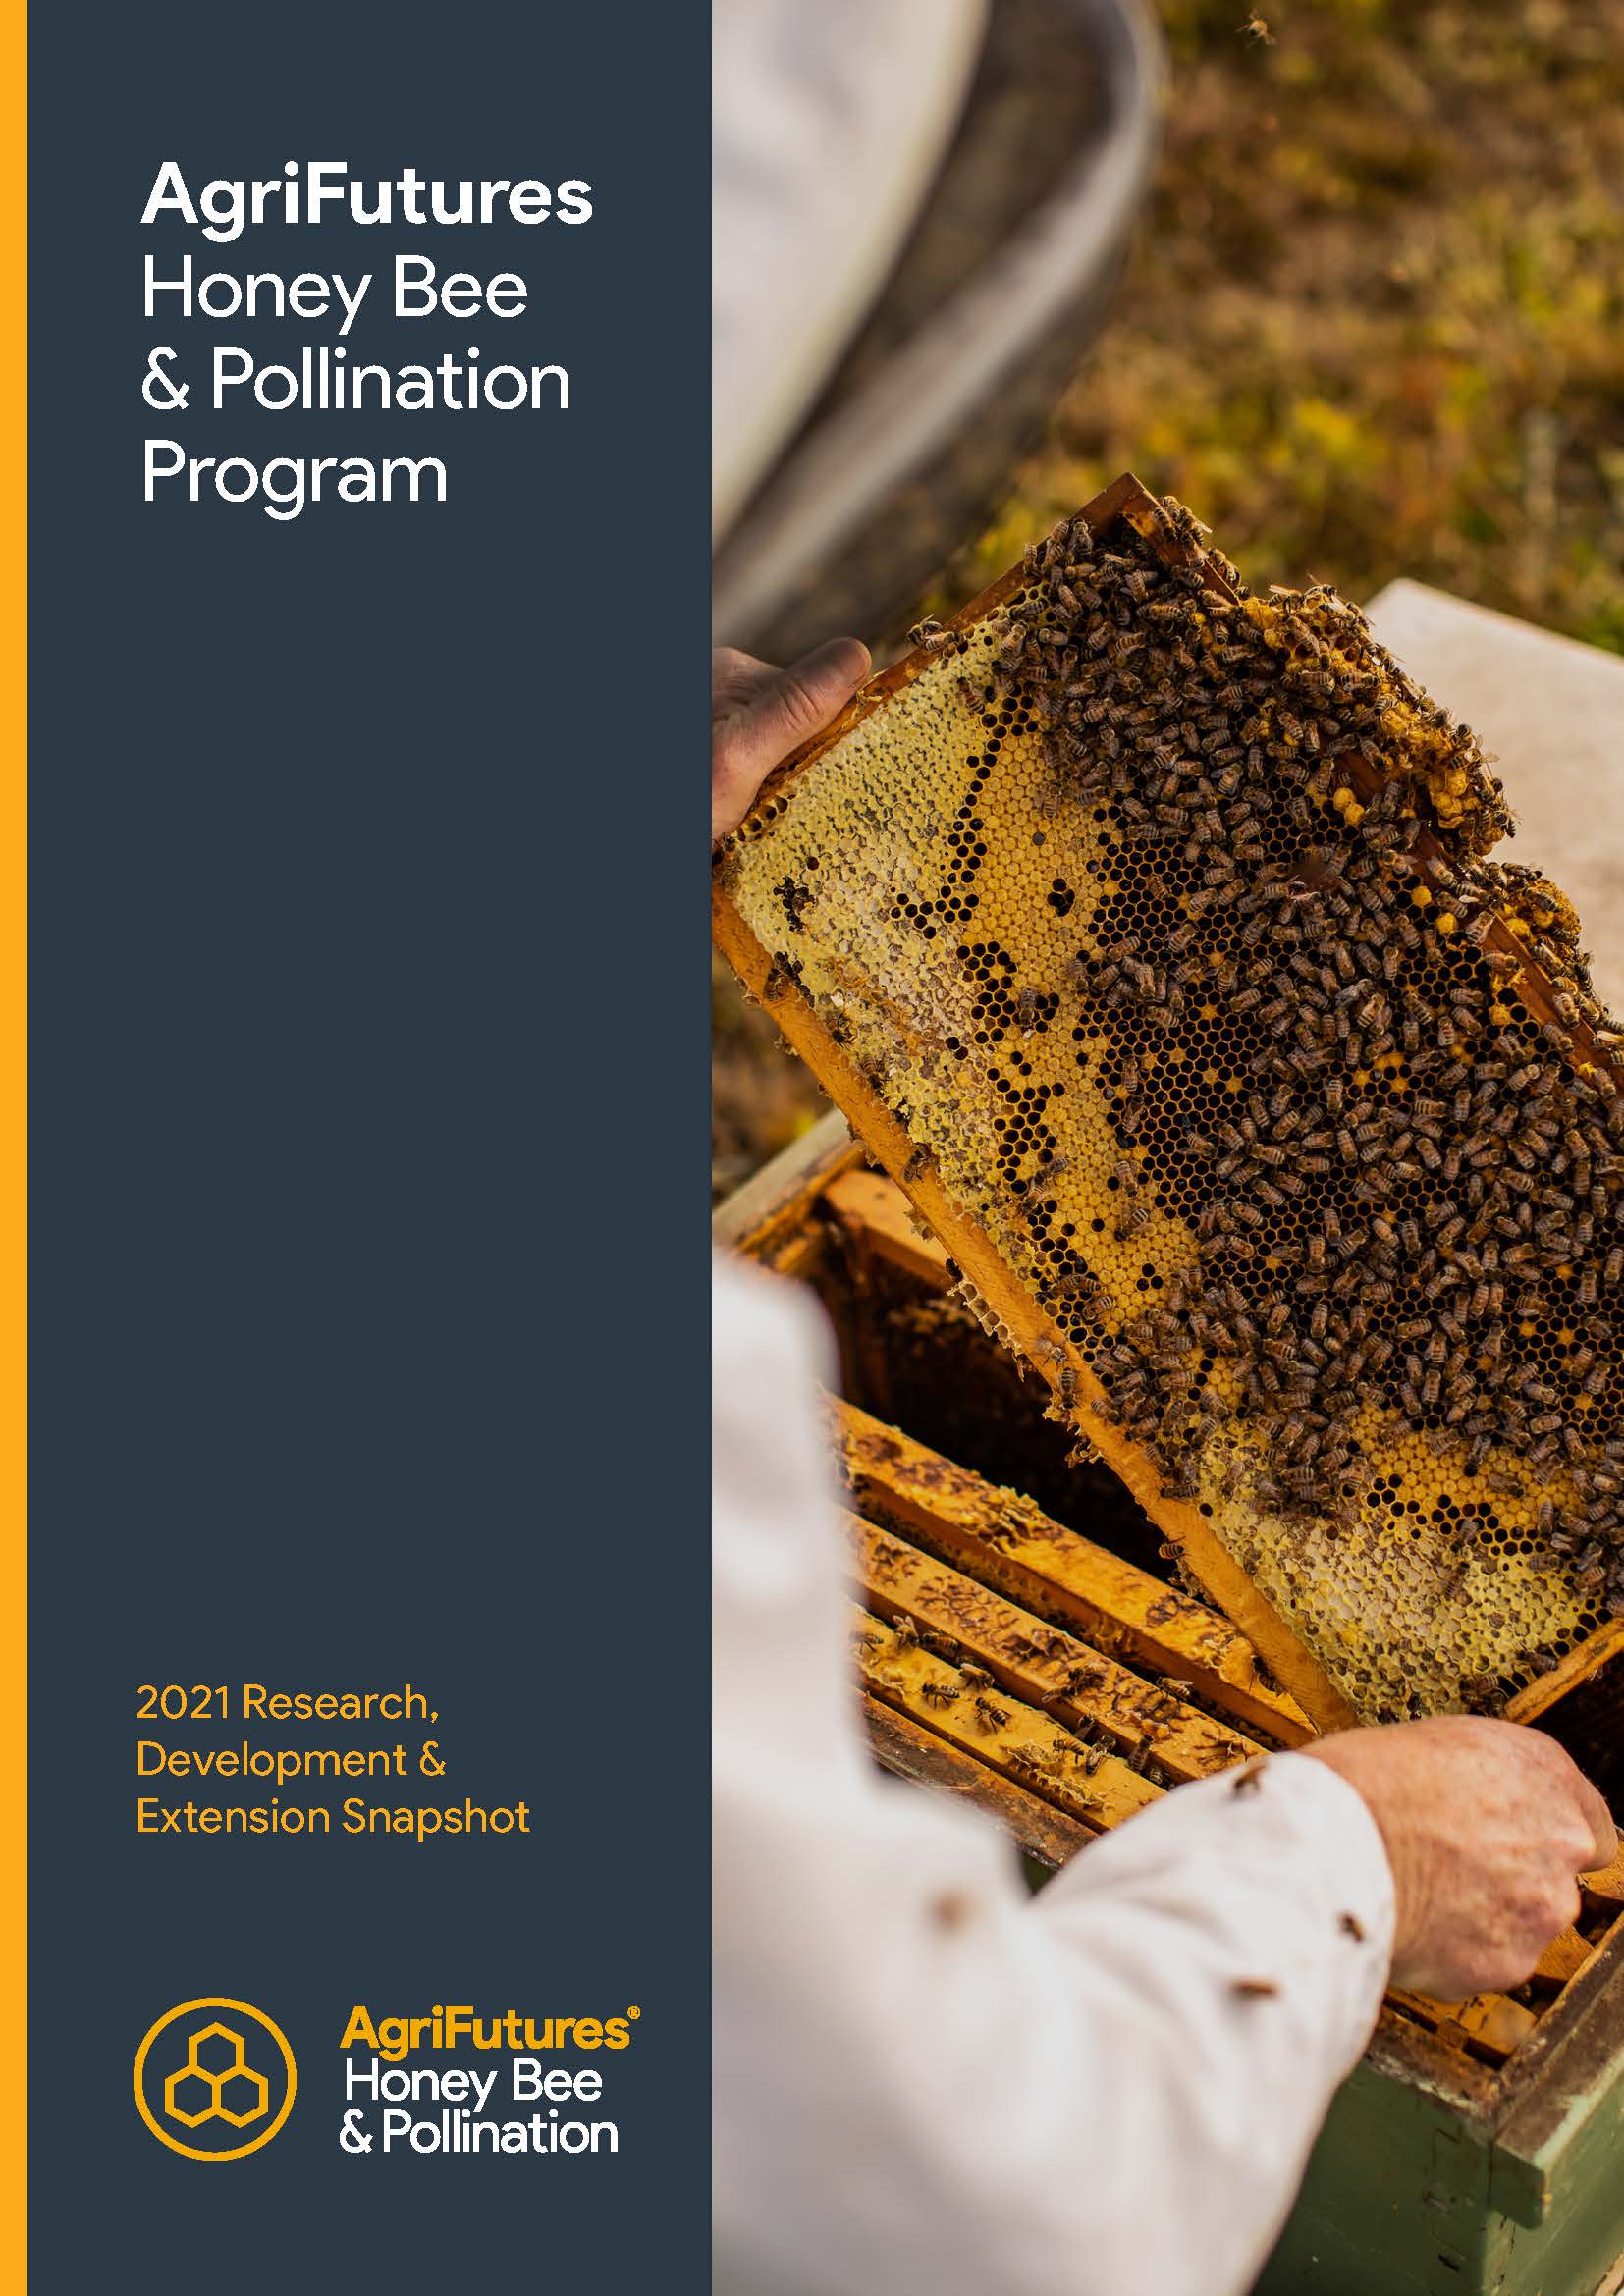 AgriFutures Honey Bee & Pollination Program 2021 RD&E Snapshot - image